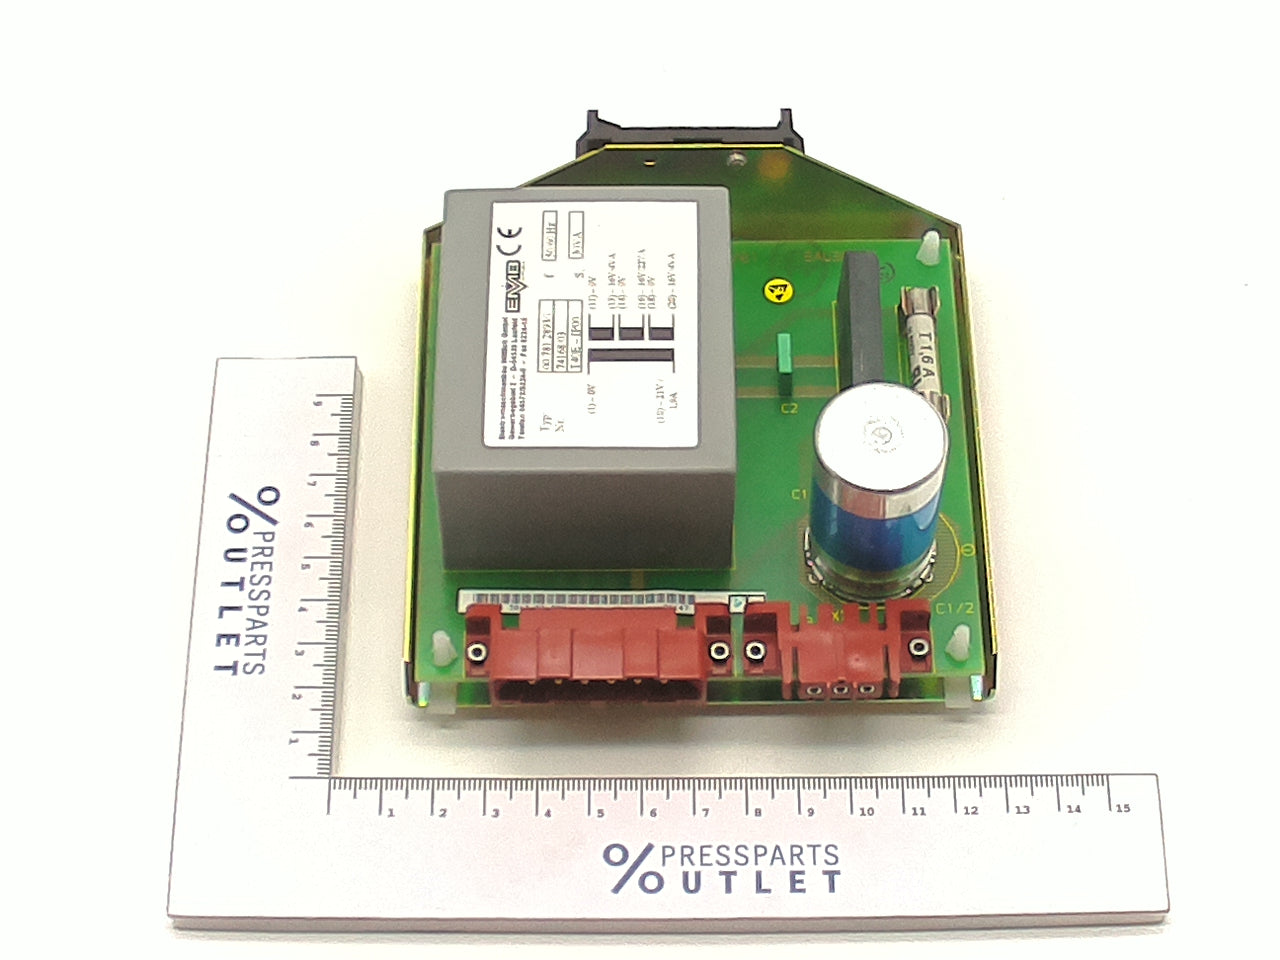 Memory analog board Modul SPM - 92.144.3012/02 - SpeicheranaloKarte Modul SPM